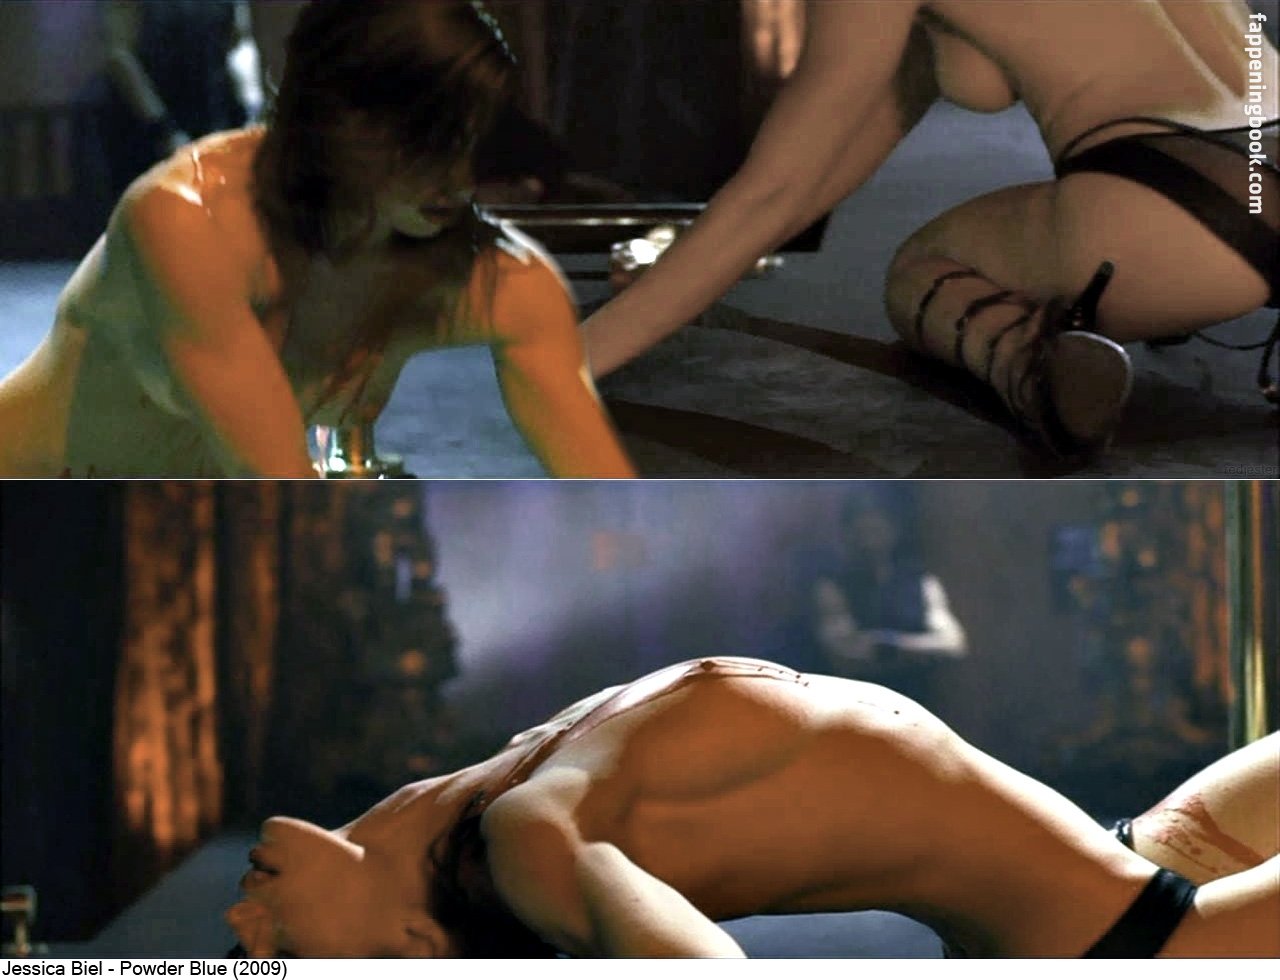 Jessica Biel Nude, The Fappening - Photo #255012 - FappeningBook.